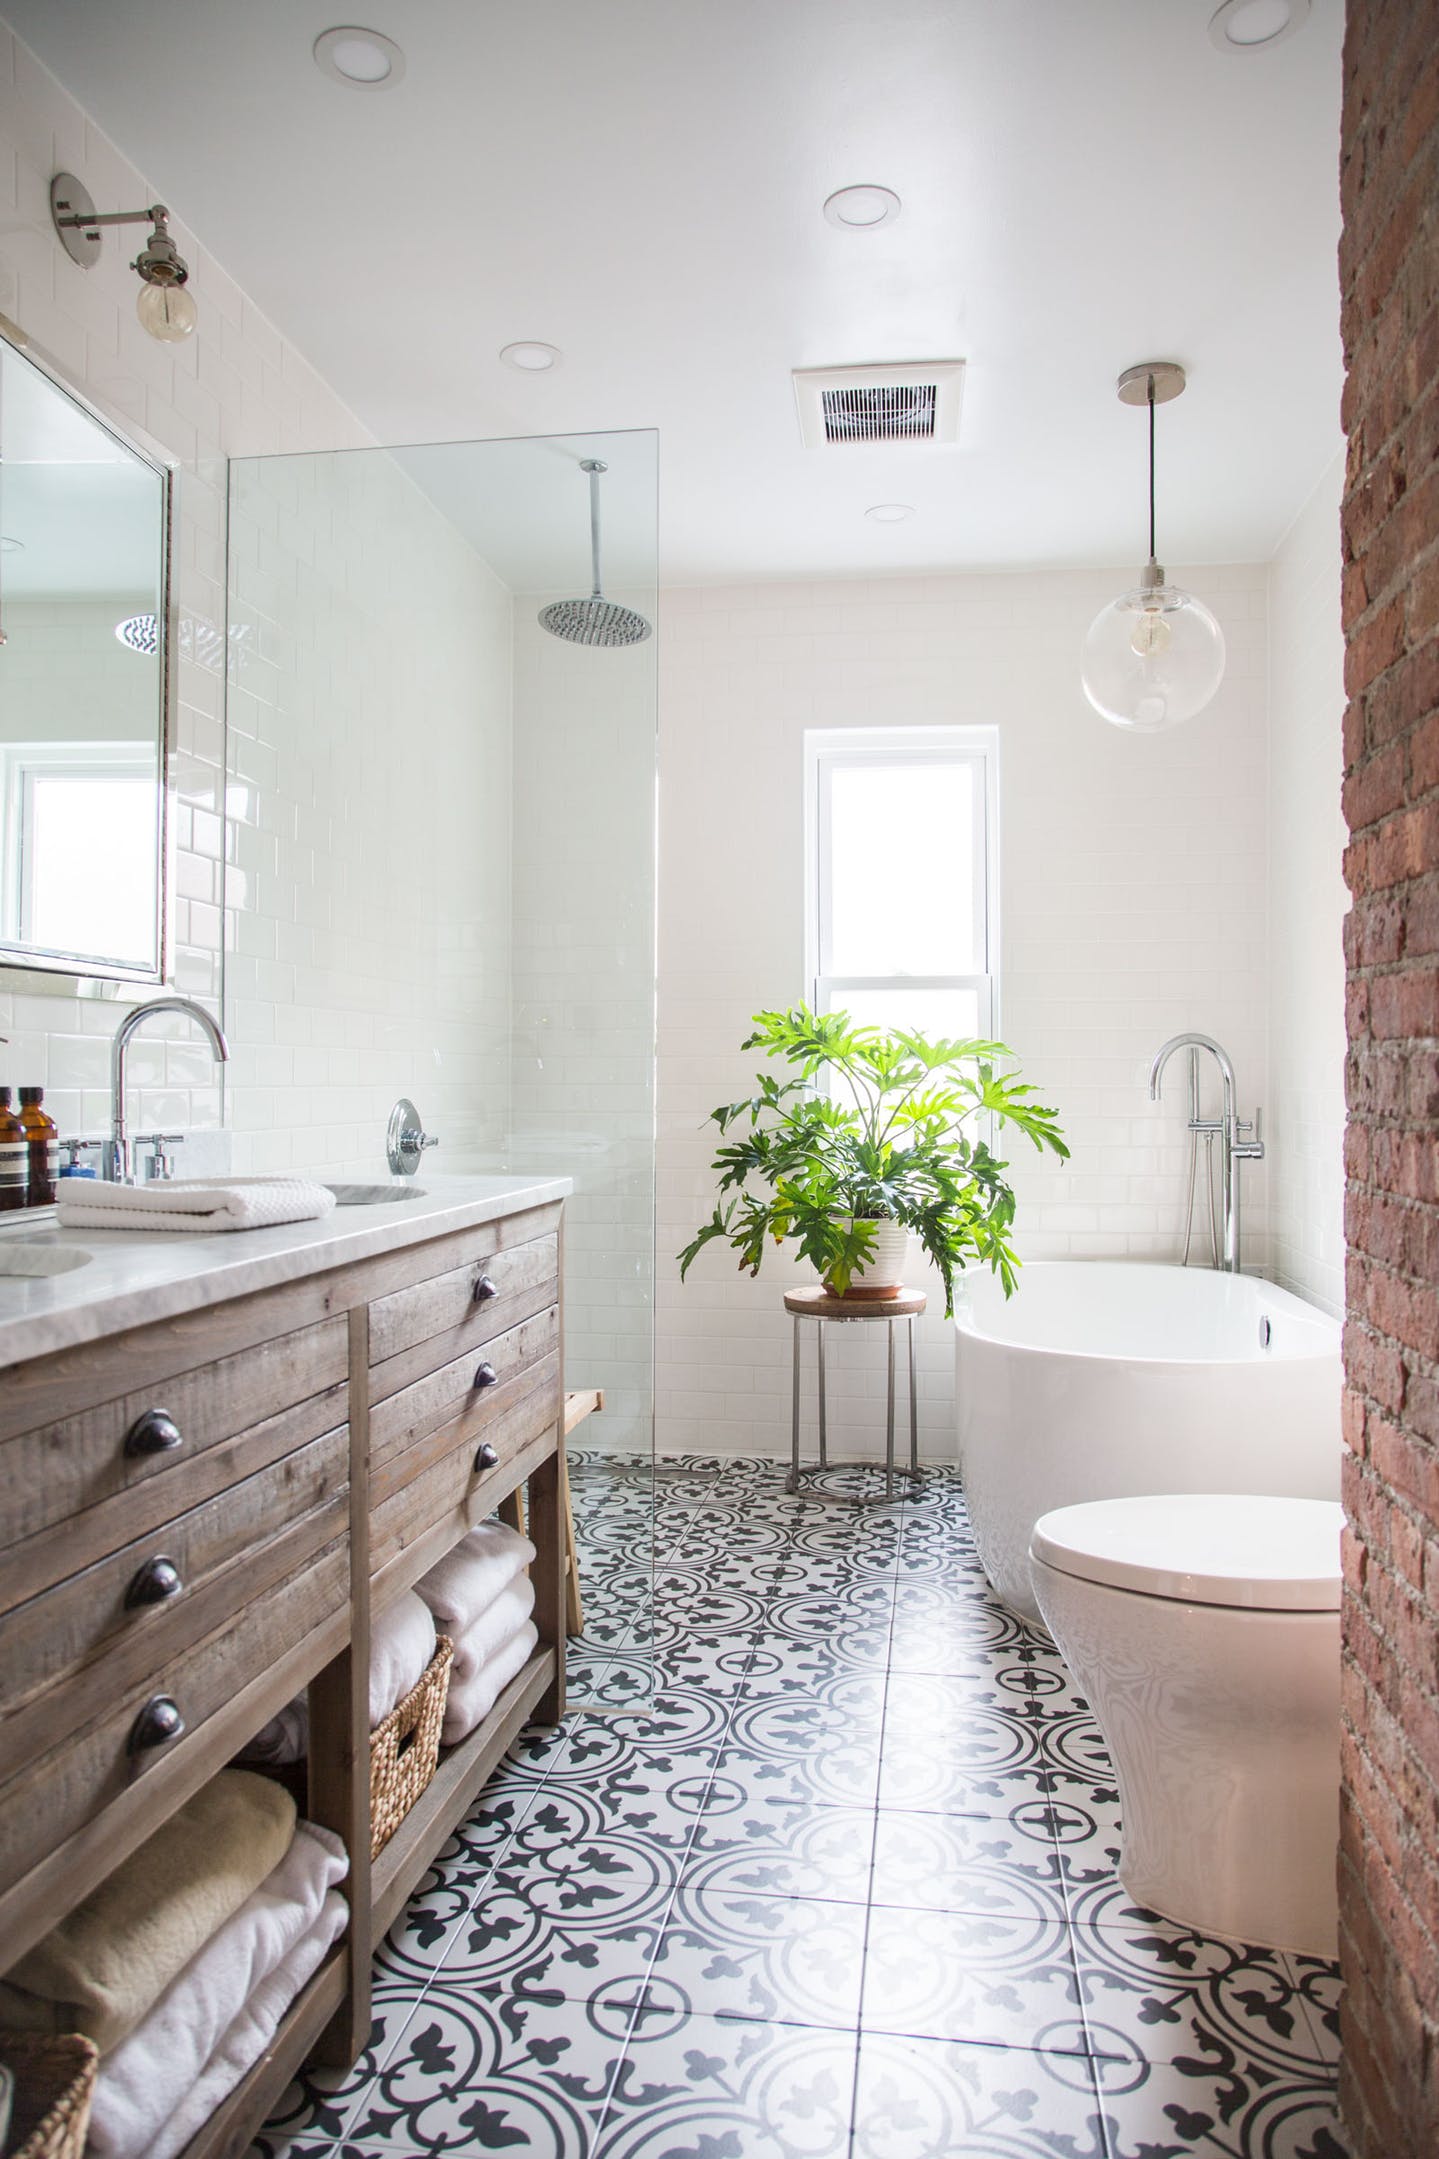 25 Amazing Bathroom Design Ideas - Home & Garden Sphere